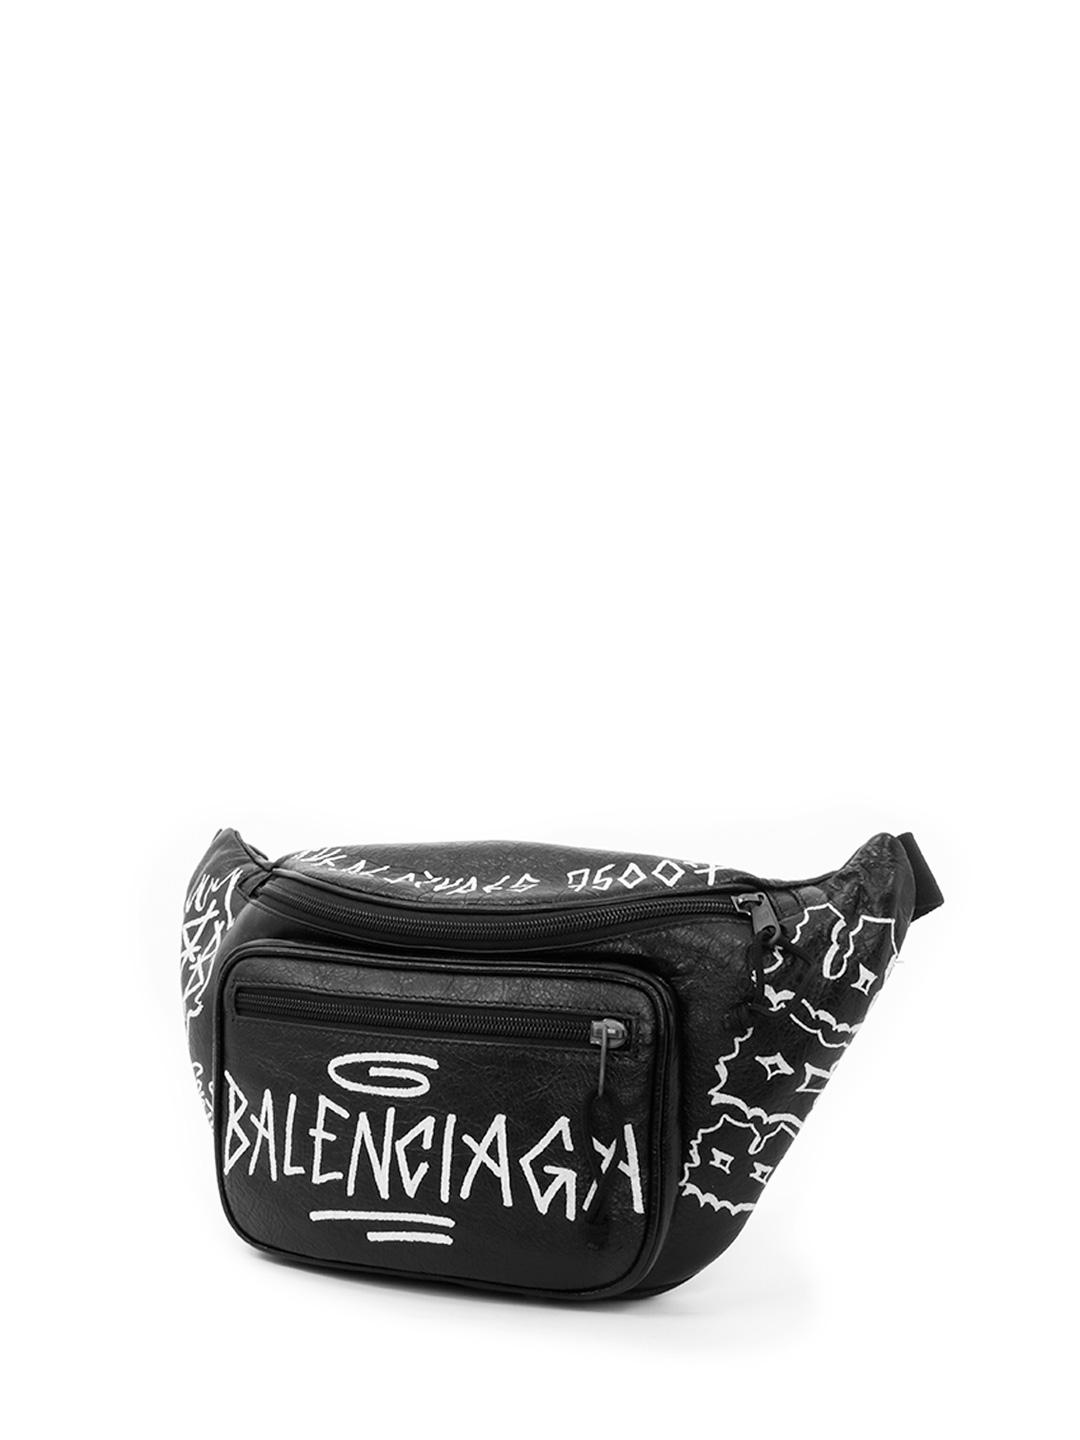 Balenciaga Graffiti Printed Leather Belt Bag in Black for Men | Lyst